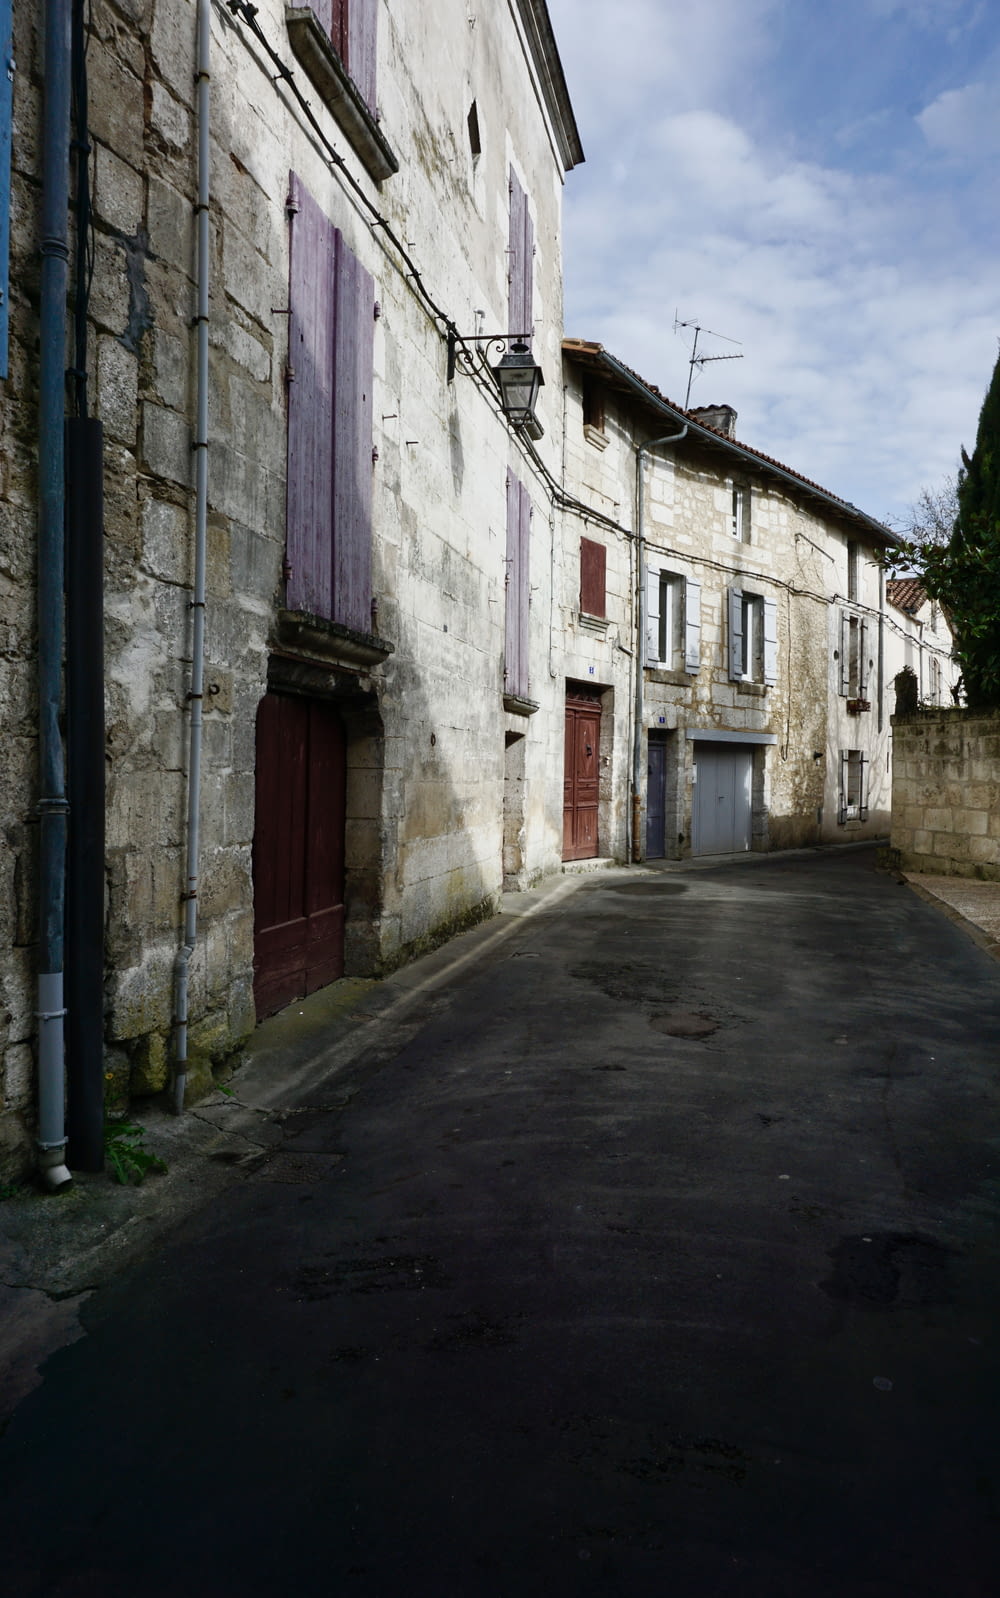 an empty street in an old european town